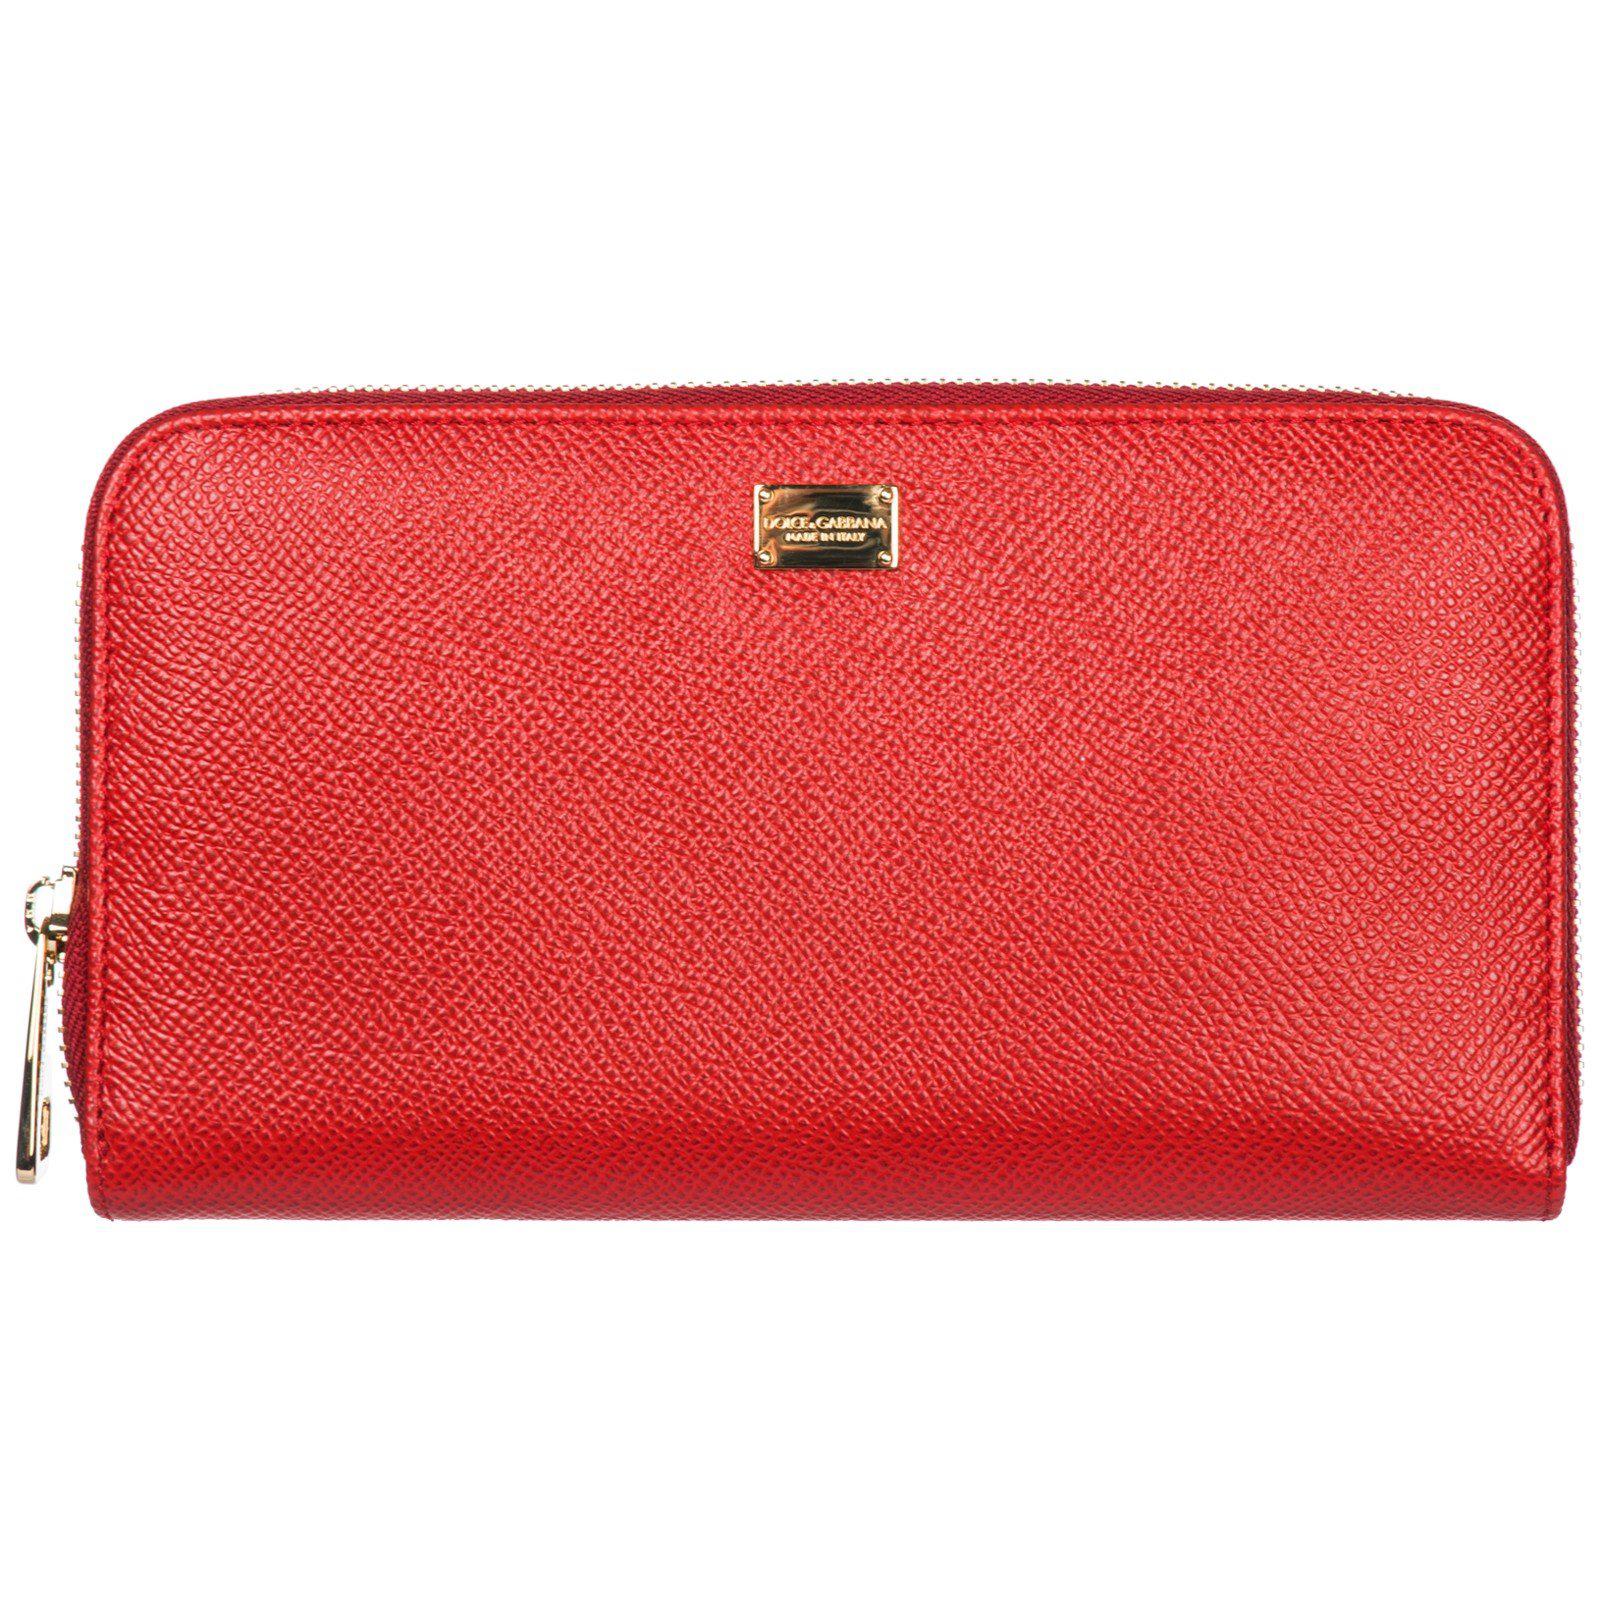 Lyst - Dolce & Gabbana Logo Plaque Zip Wallet in Red